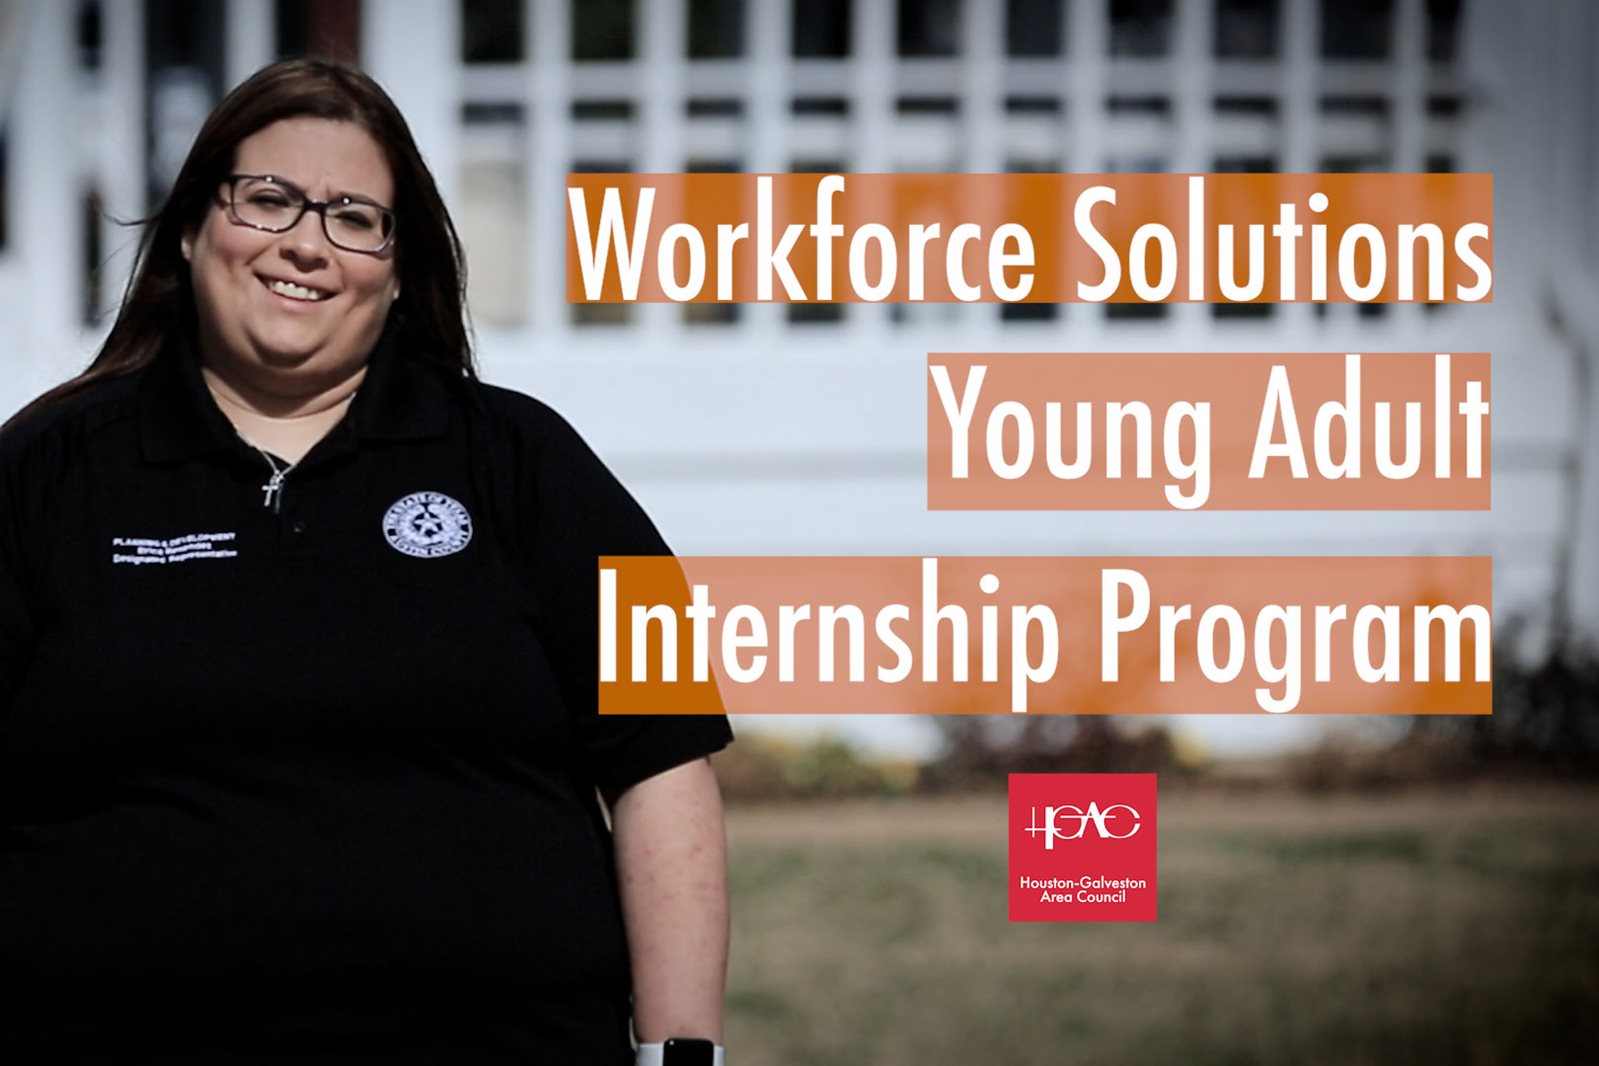 Workforce Solutions Young Adult Internship Program